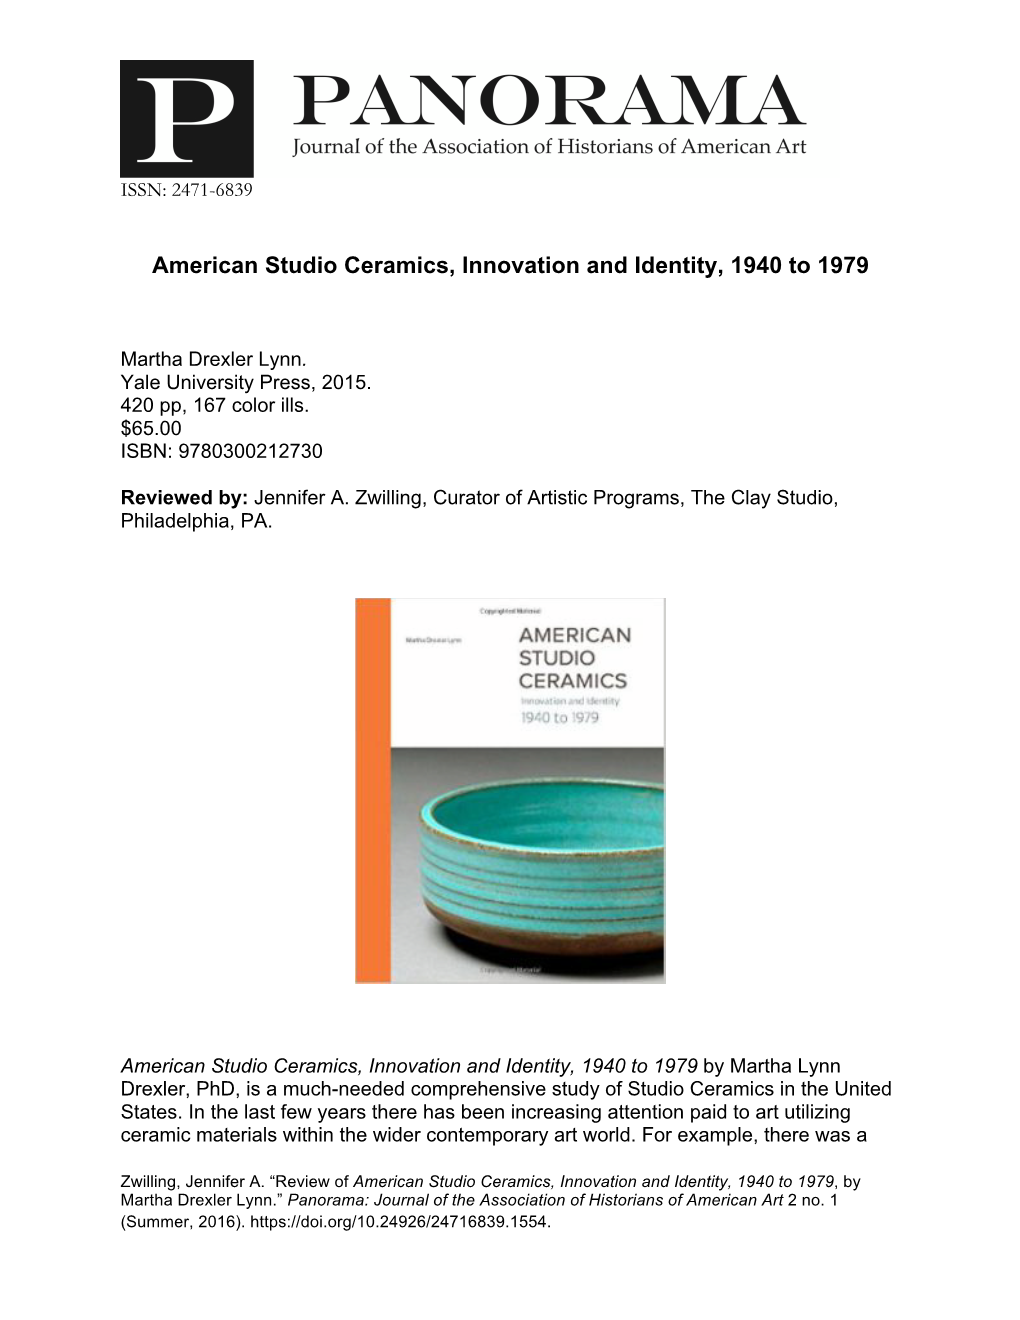 American Studio Ceramics, Innovation and Identity, 1940 to 1979